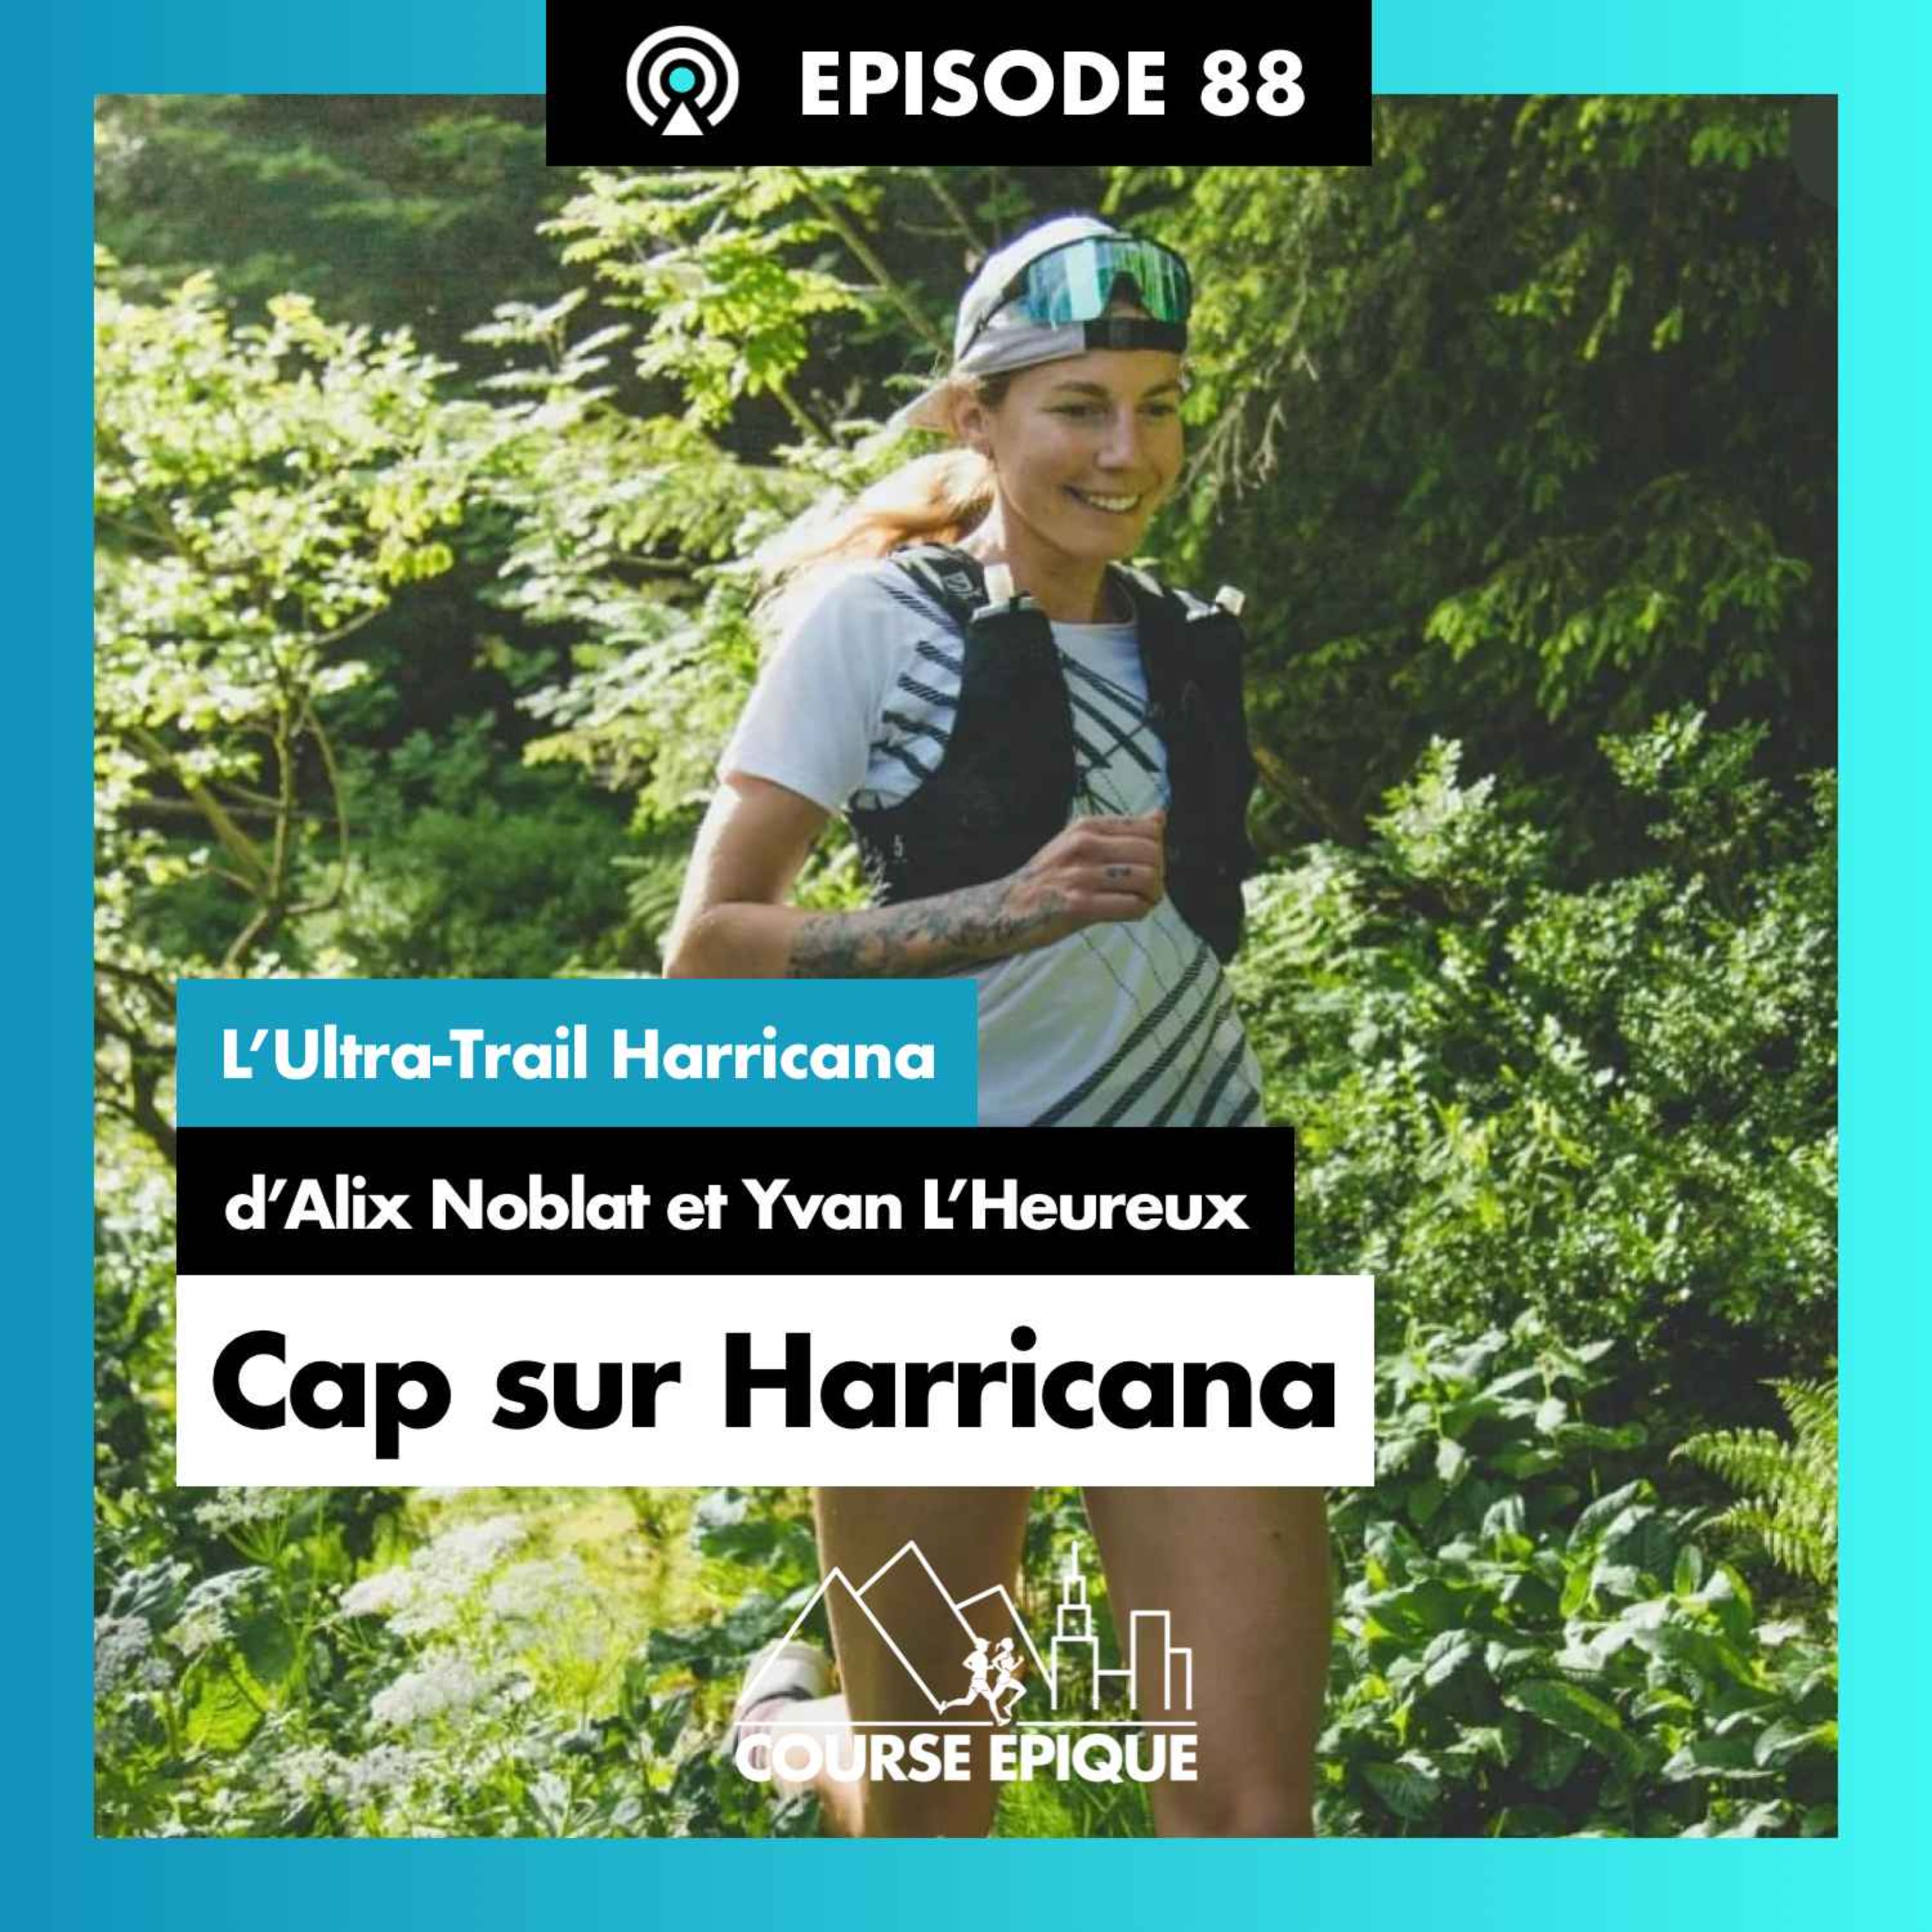 #88 "Cap sur Harricana", l'UTHC d'Alix Noblat et Yvan L'Heureux